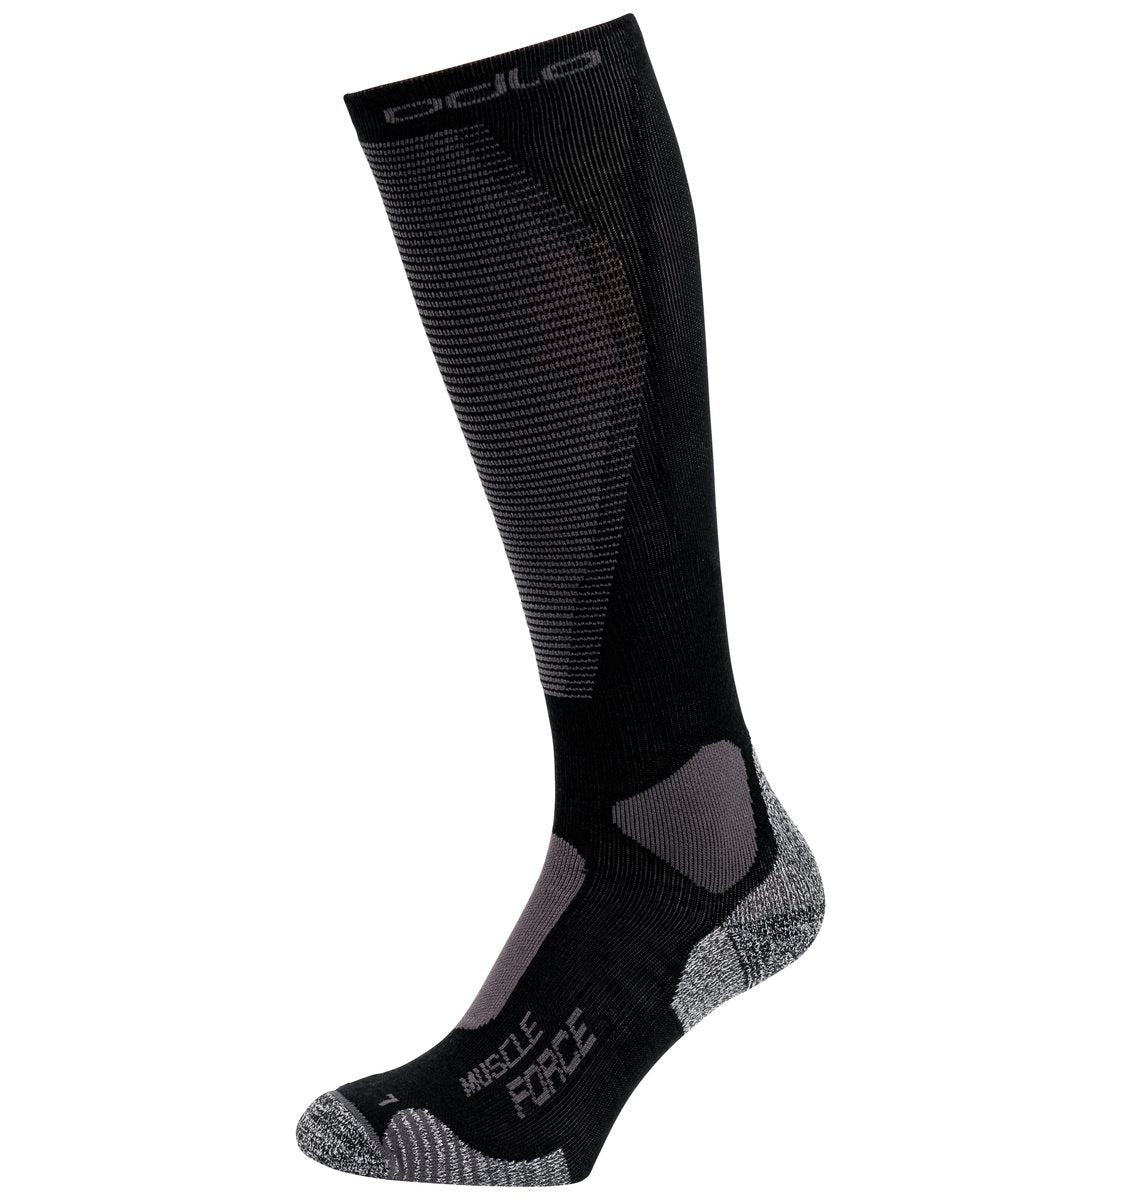 Odlo Unisex MUSCLE FORCE ACTIVE WARM LIGHT Ski Socks